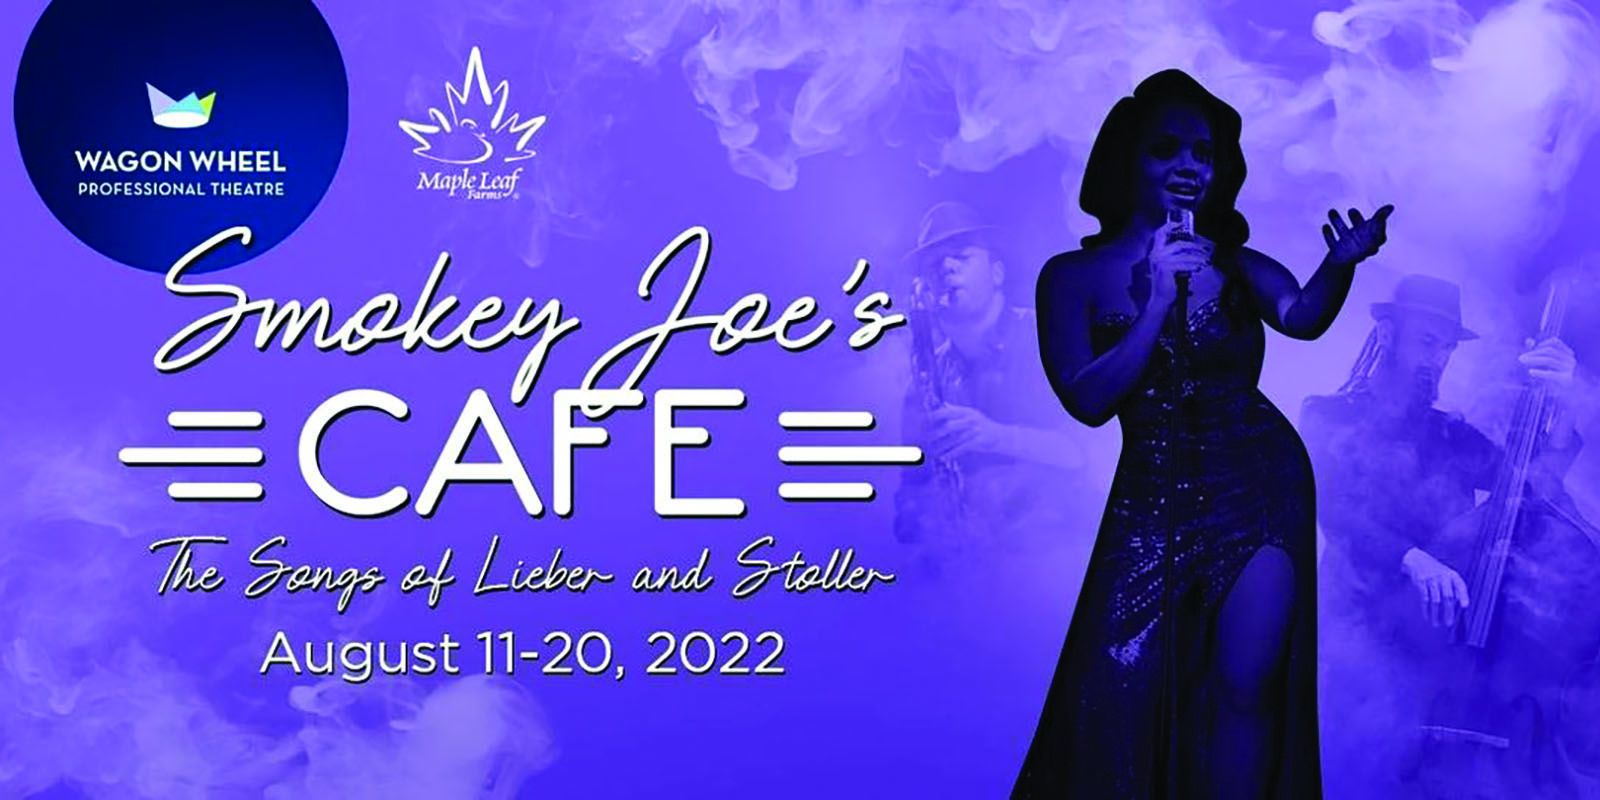 "Smokey Joe's Cafe" will run from Aug. 11-20 at Wagon Wheel Theatre.